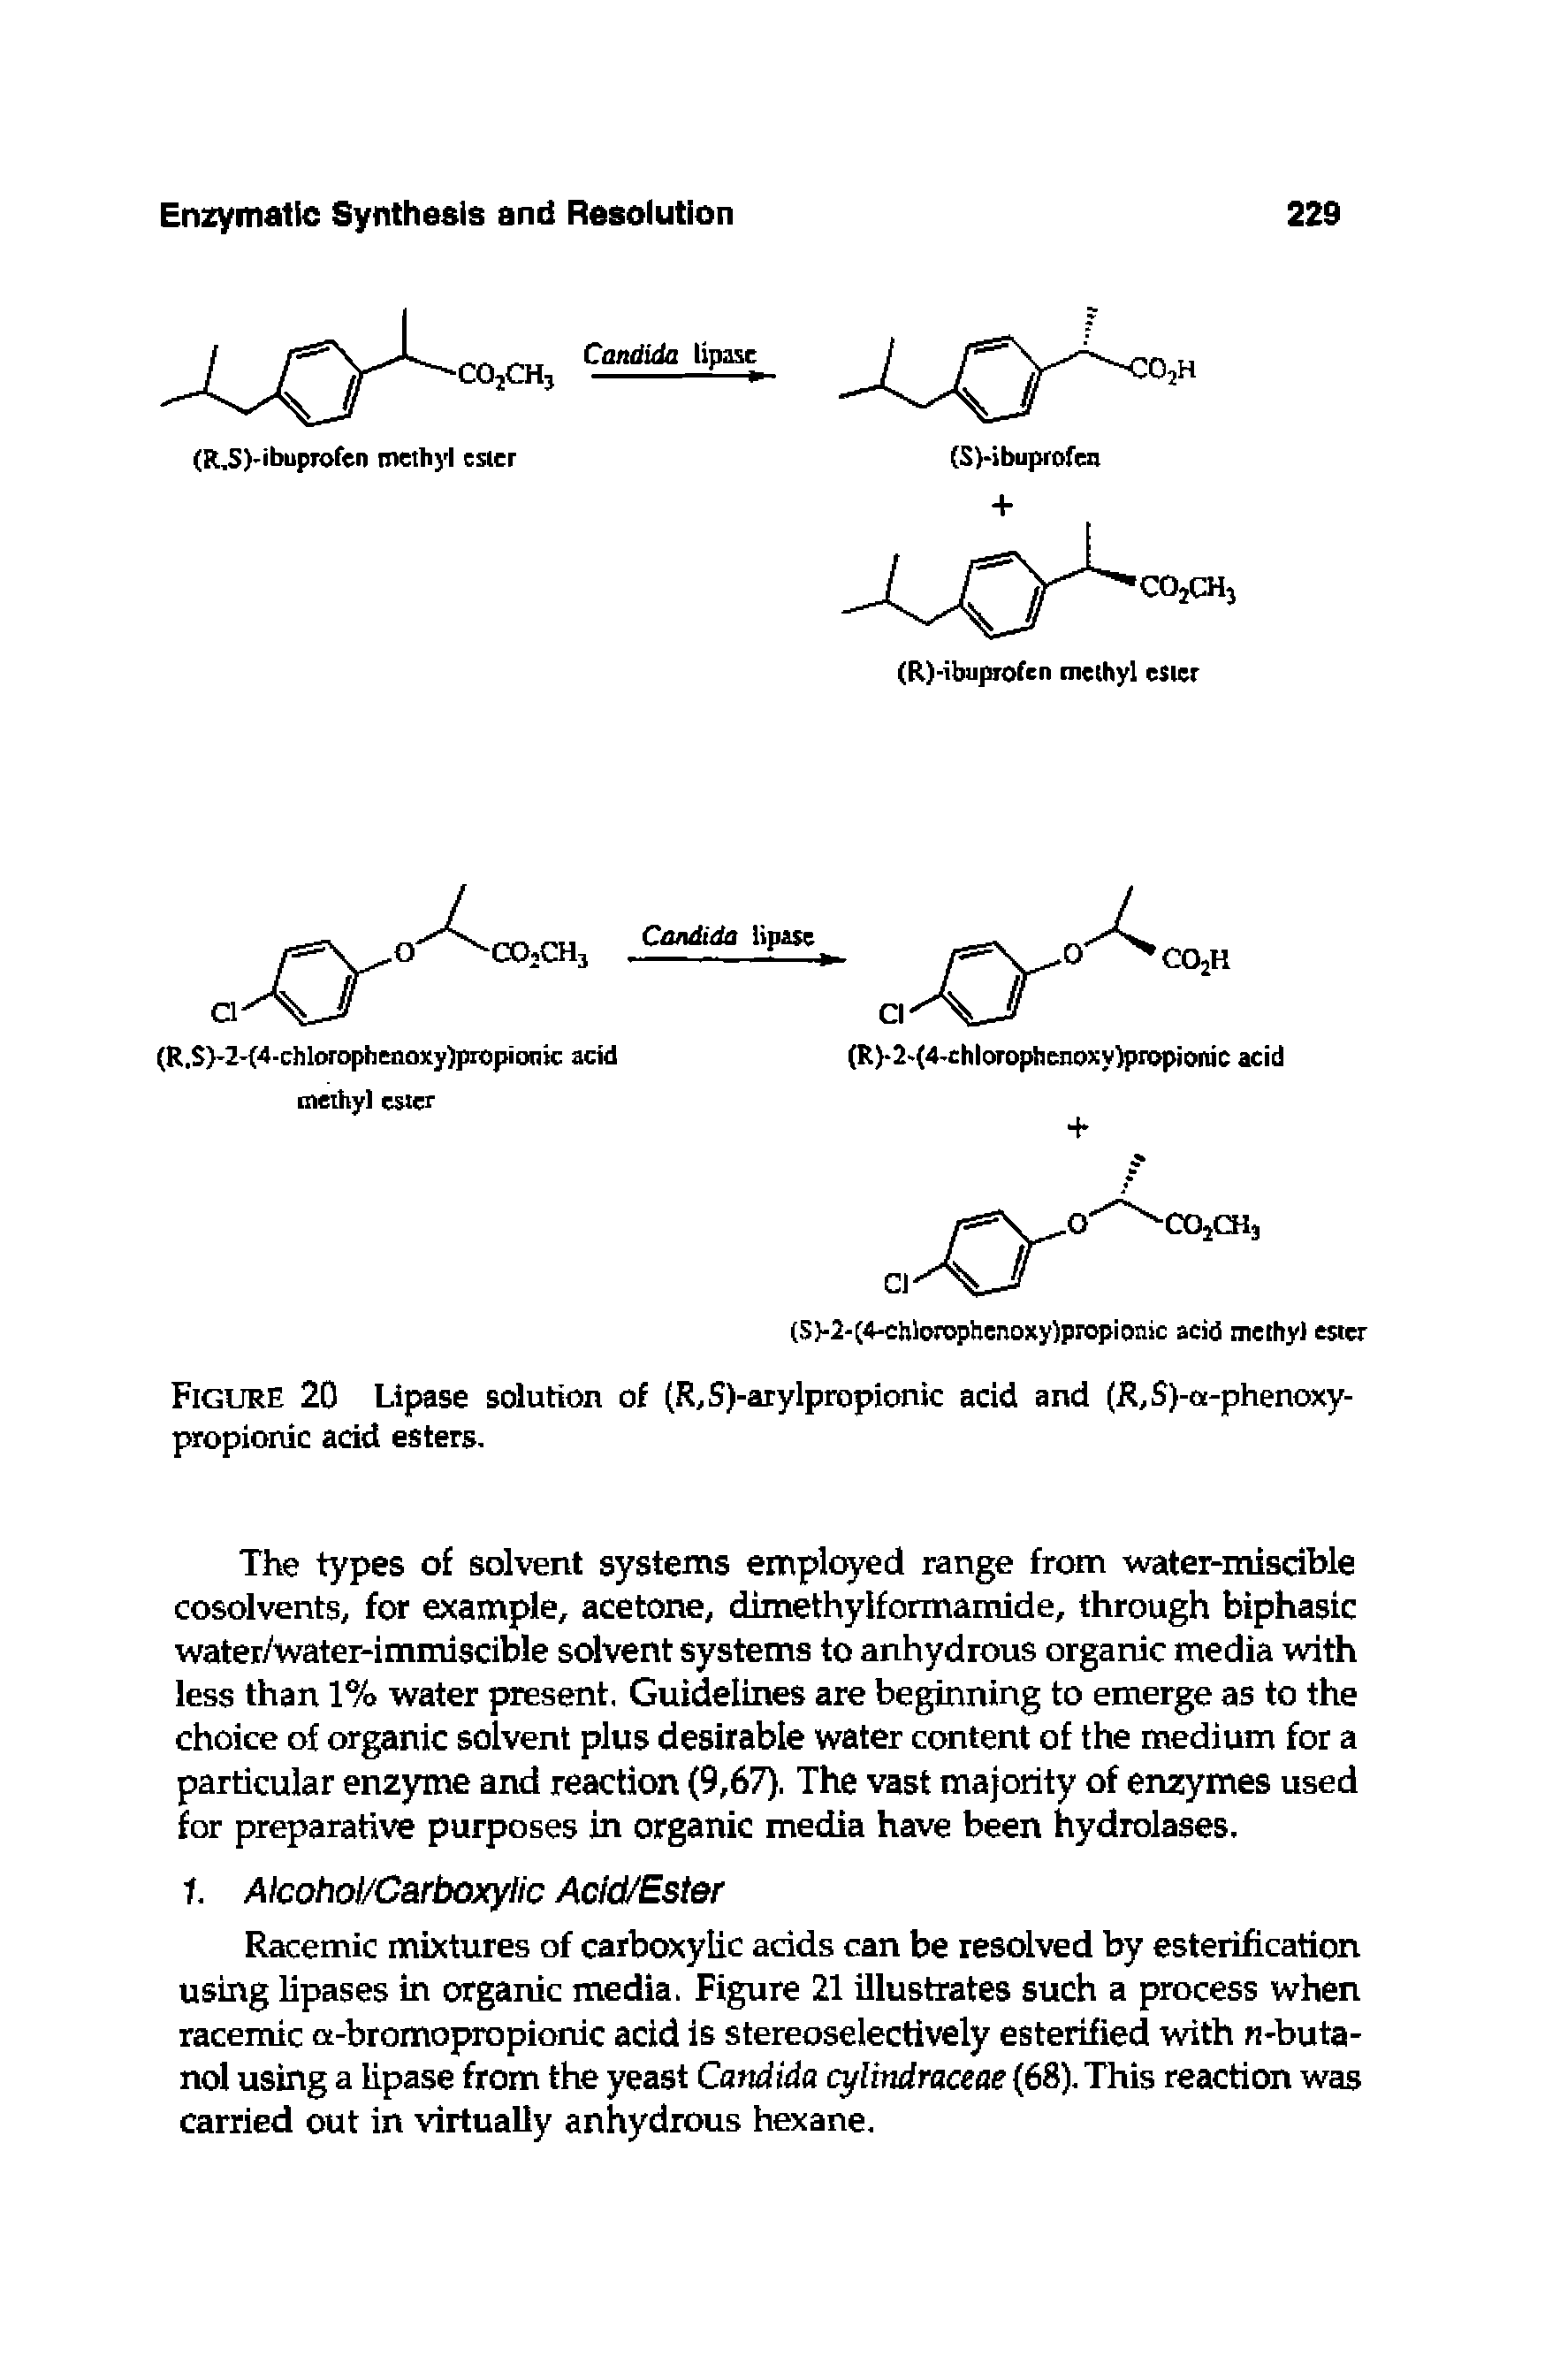 Figure 20 Lipase solution of (R,S)-arylpropionic acid and (R,S -oi-phenoxy-propionic acid esters.